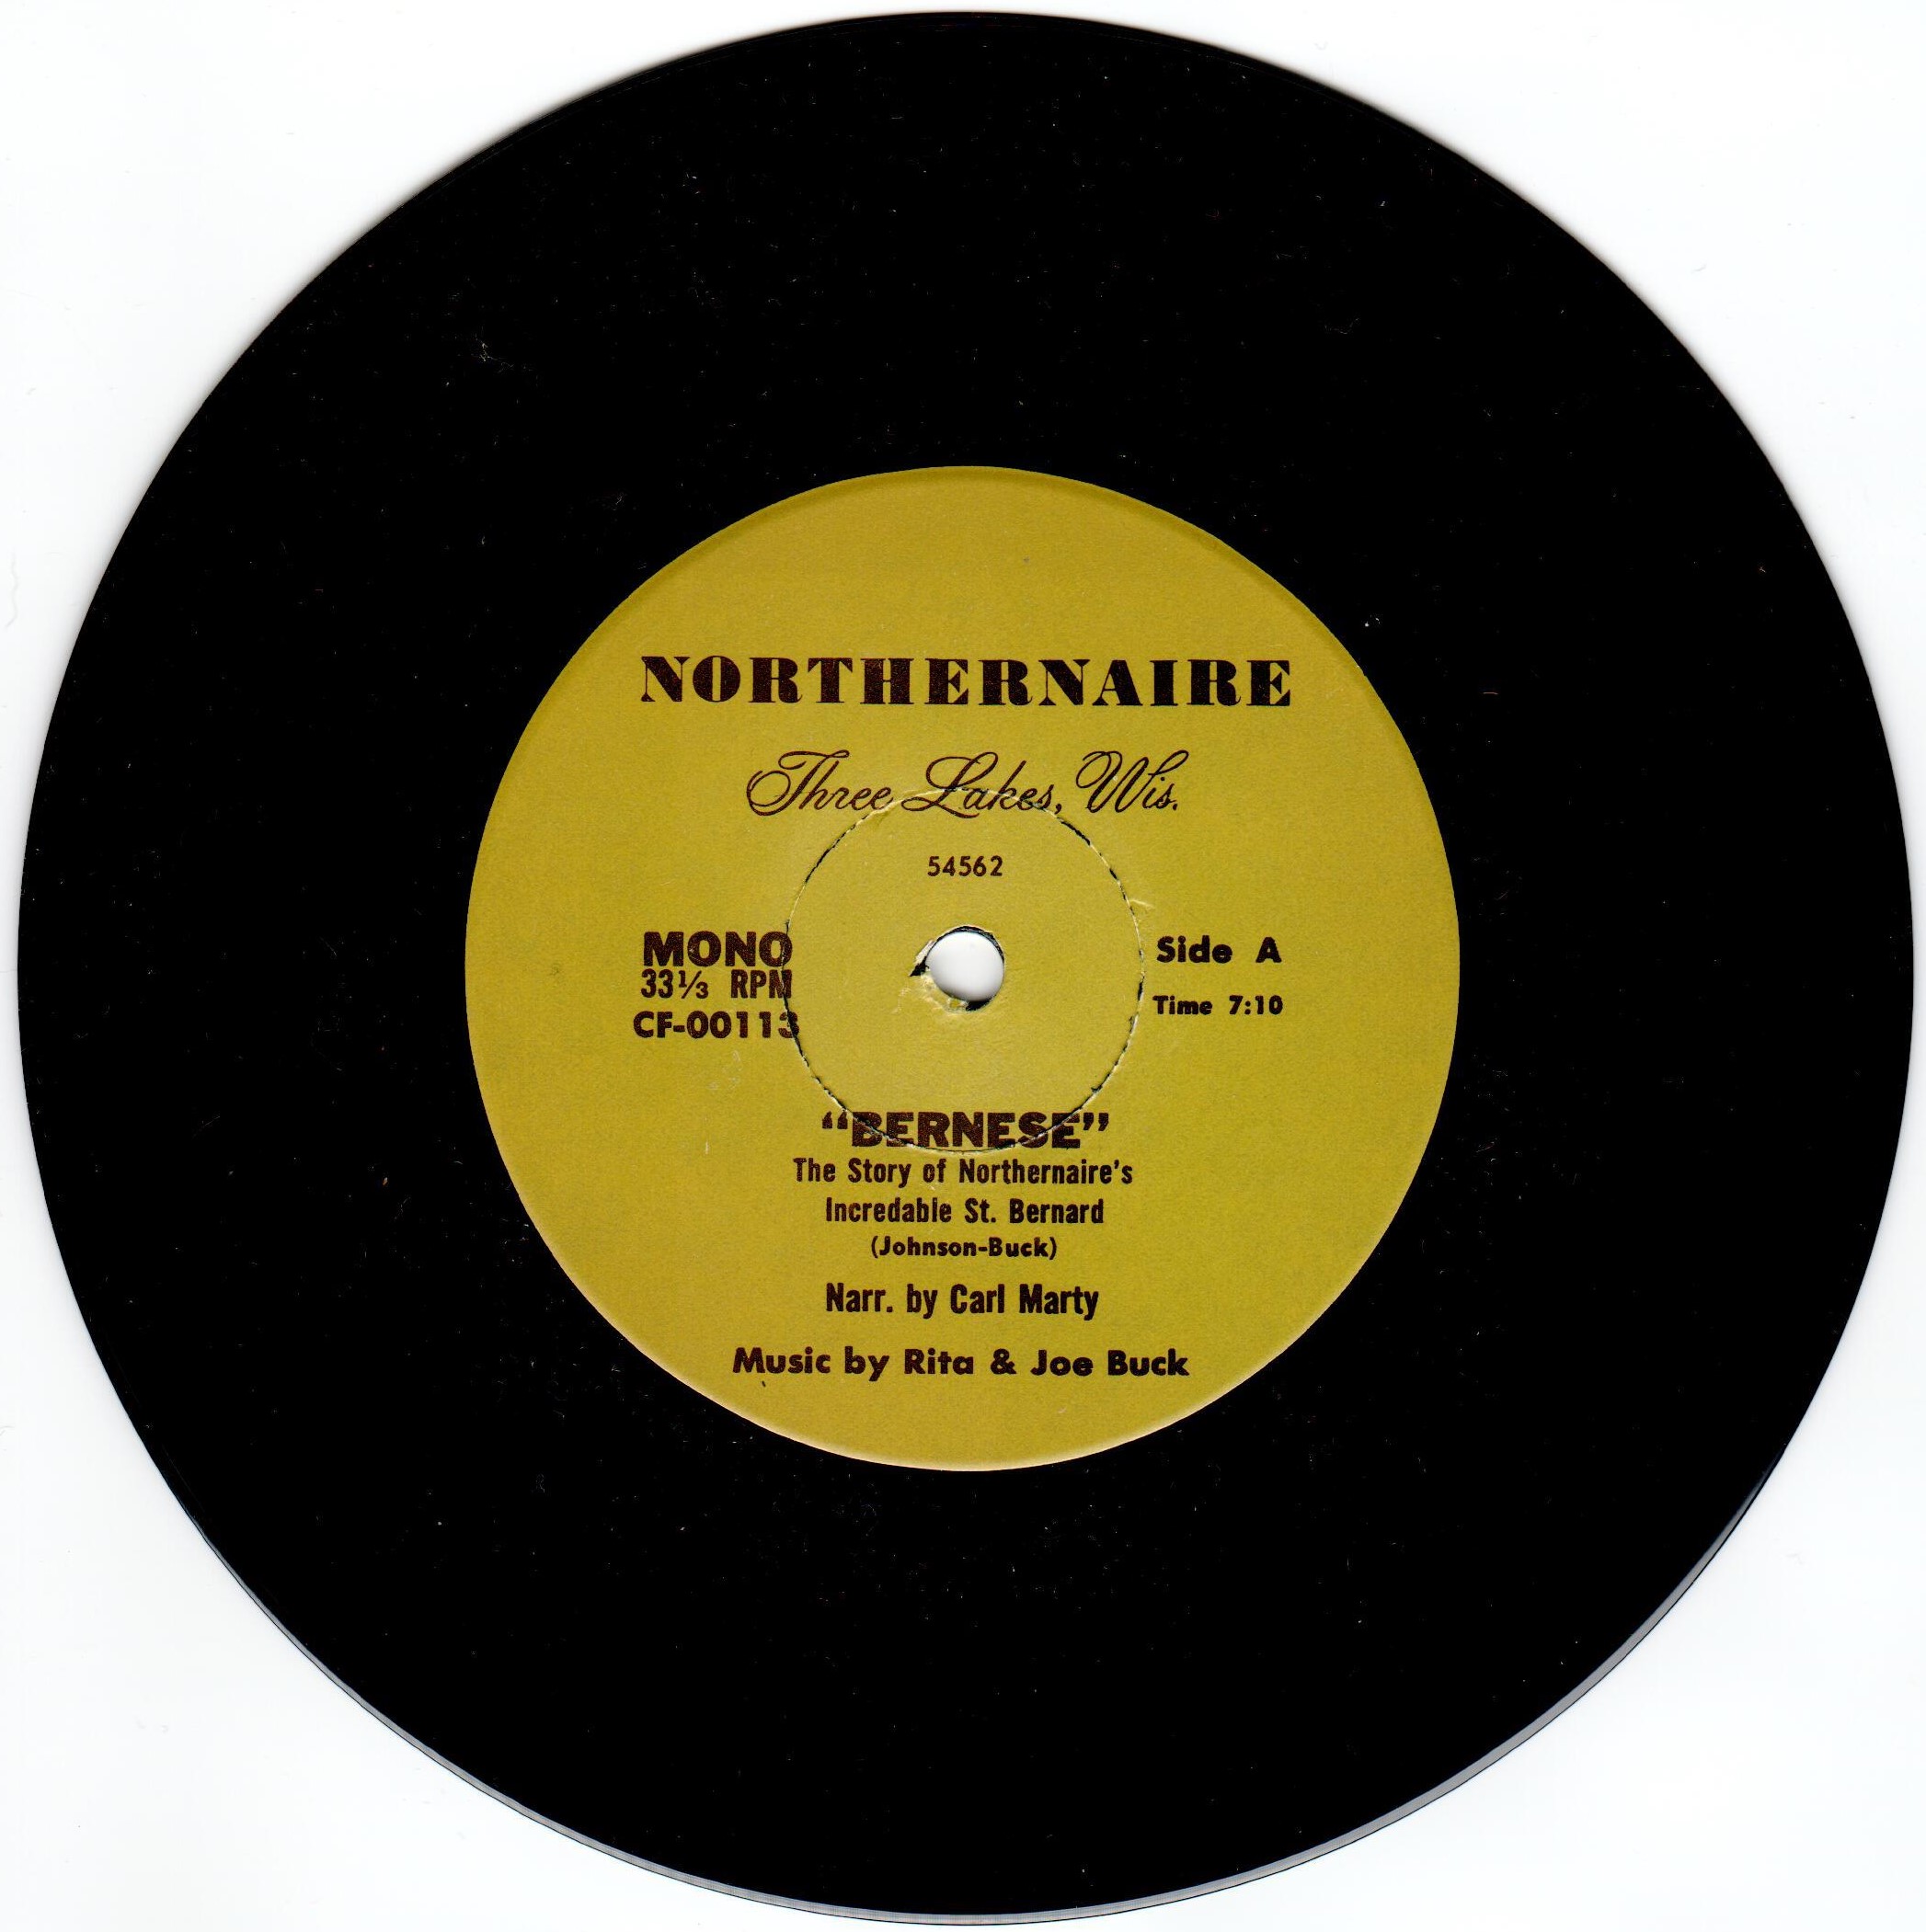 Northernaire vinyl record